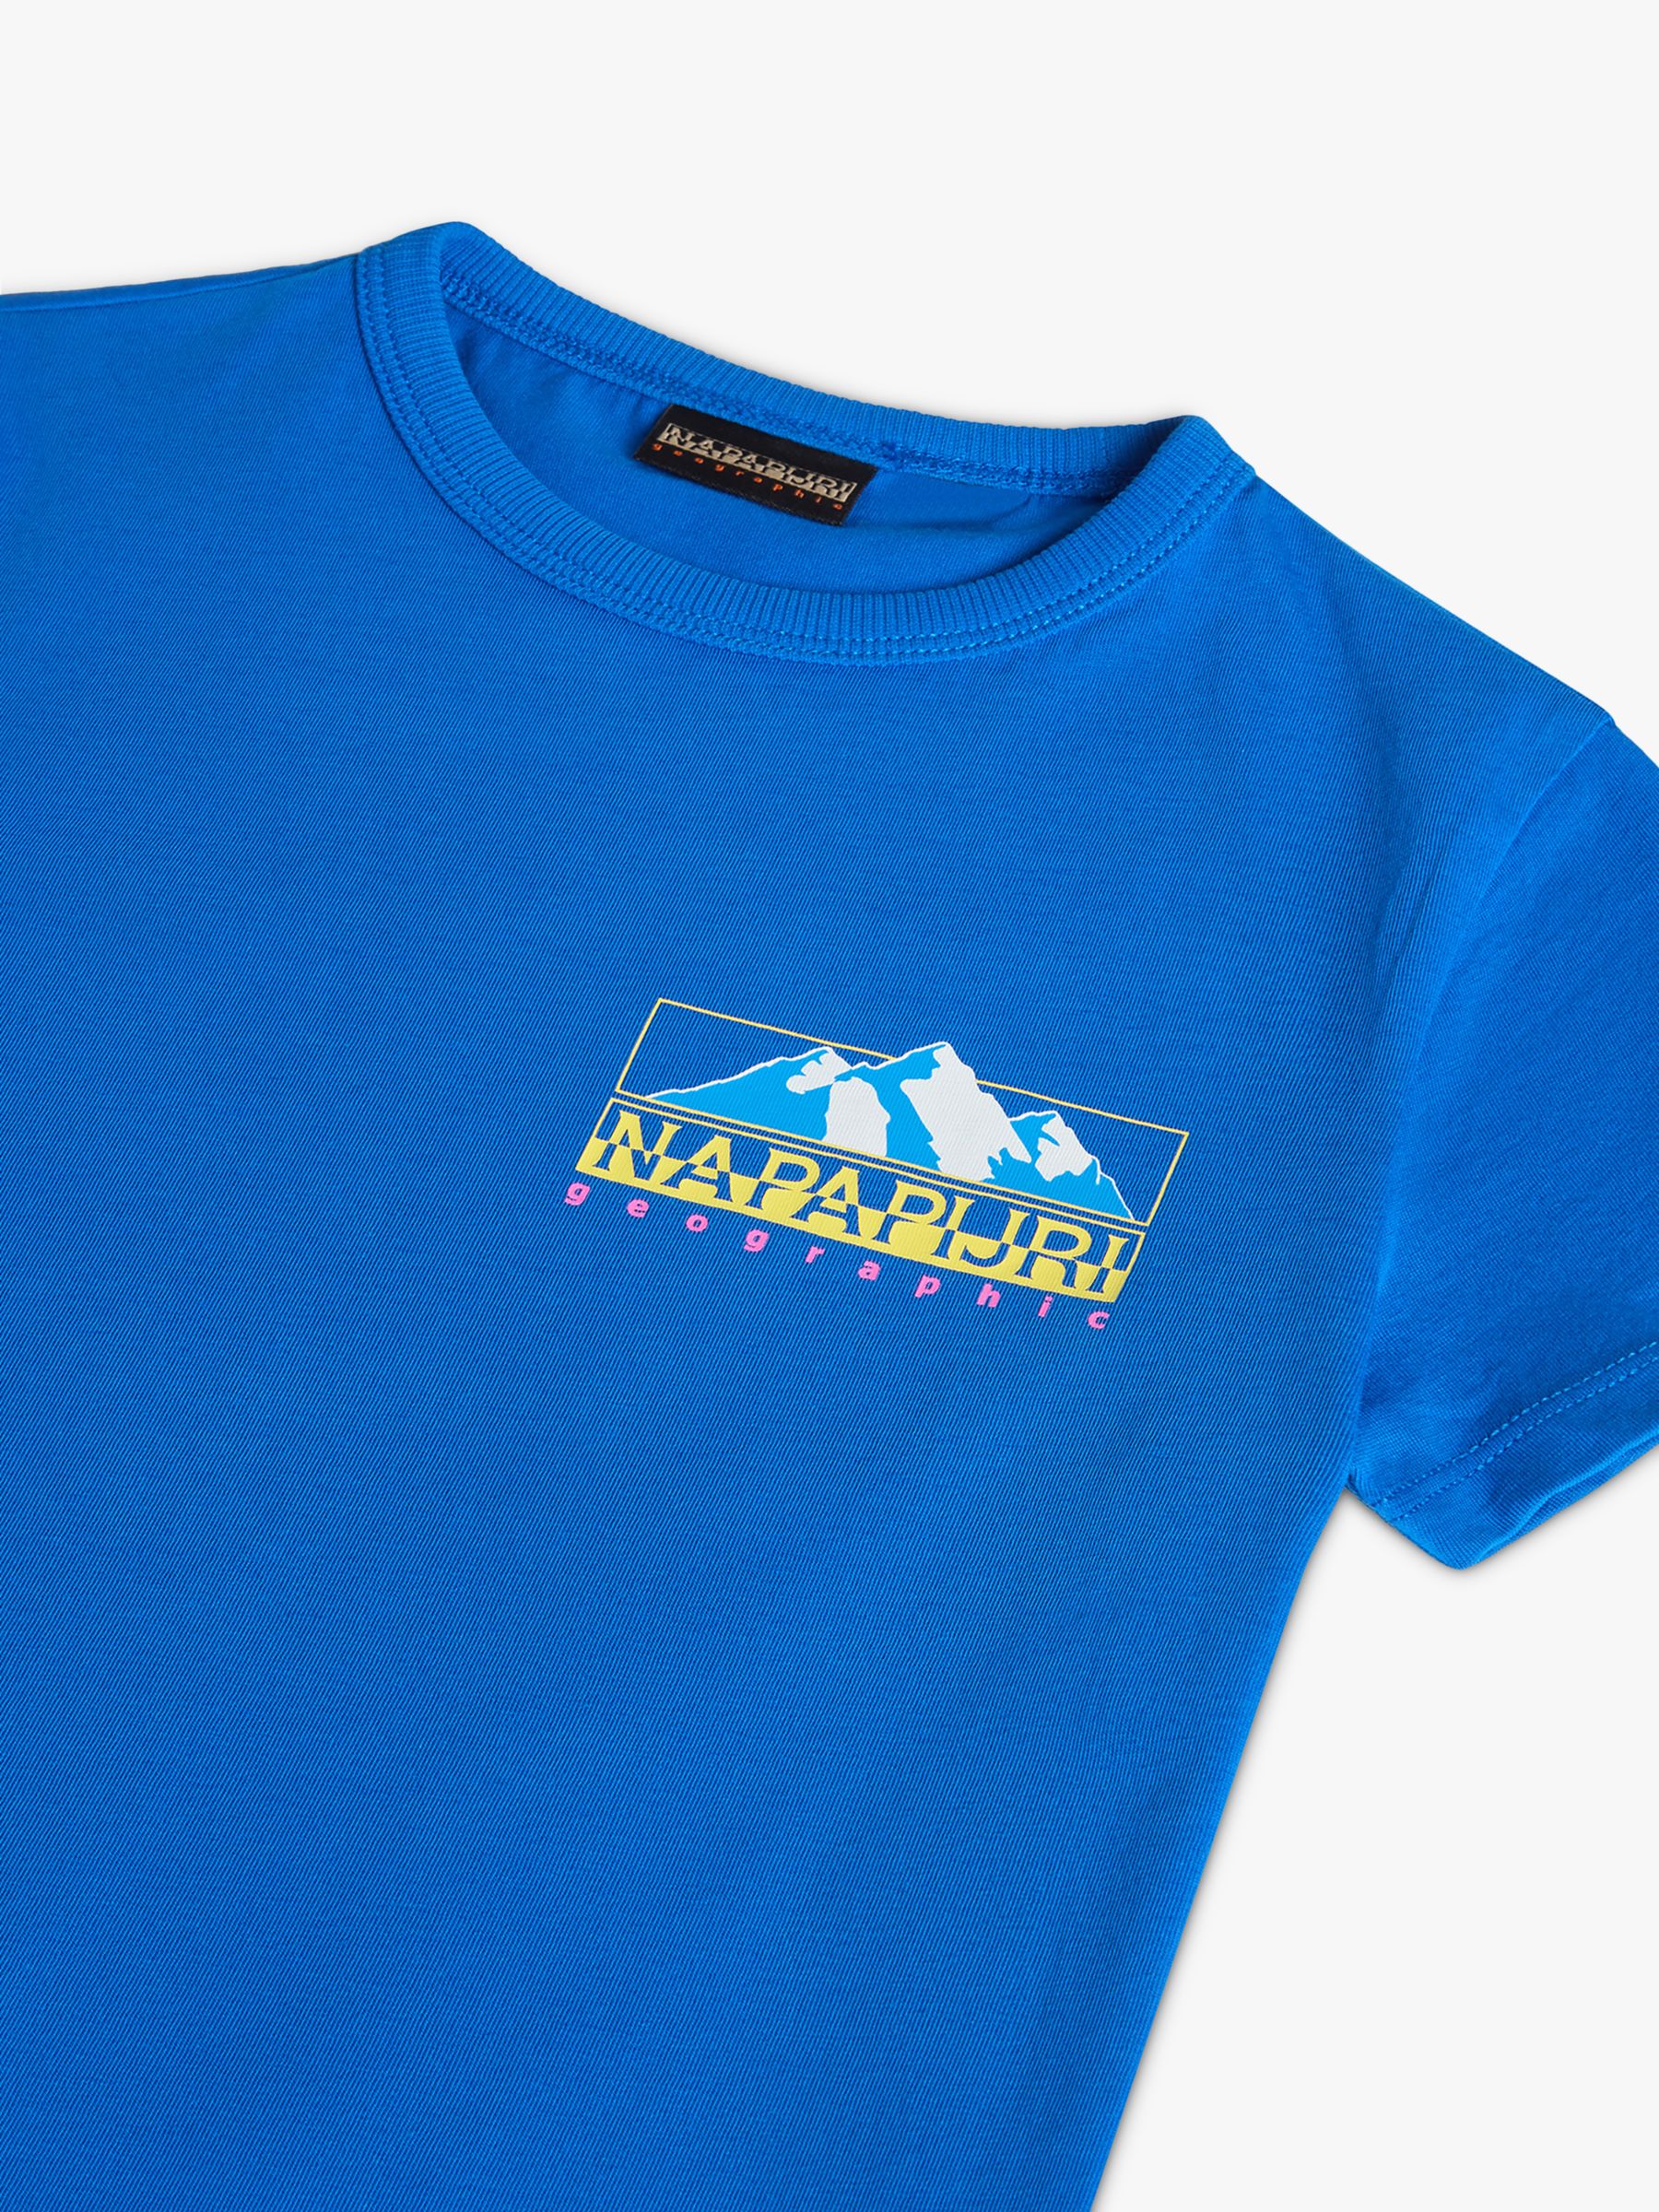 Napapijri Kids' Liard Logo Mountain Graphic T-Shirt, Royal Blue, 14 years